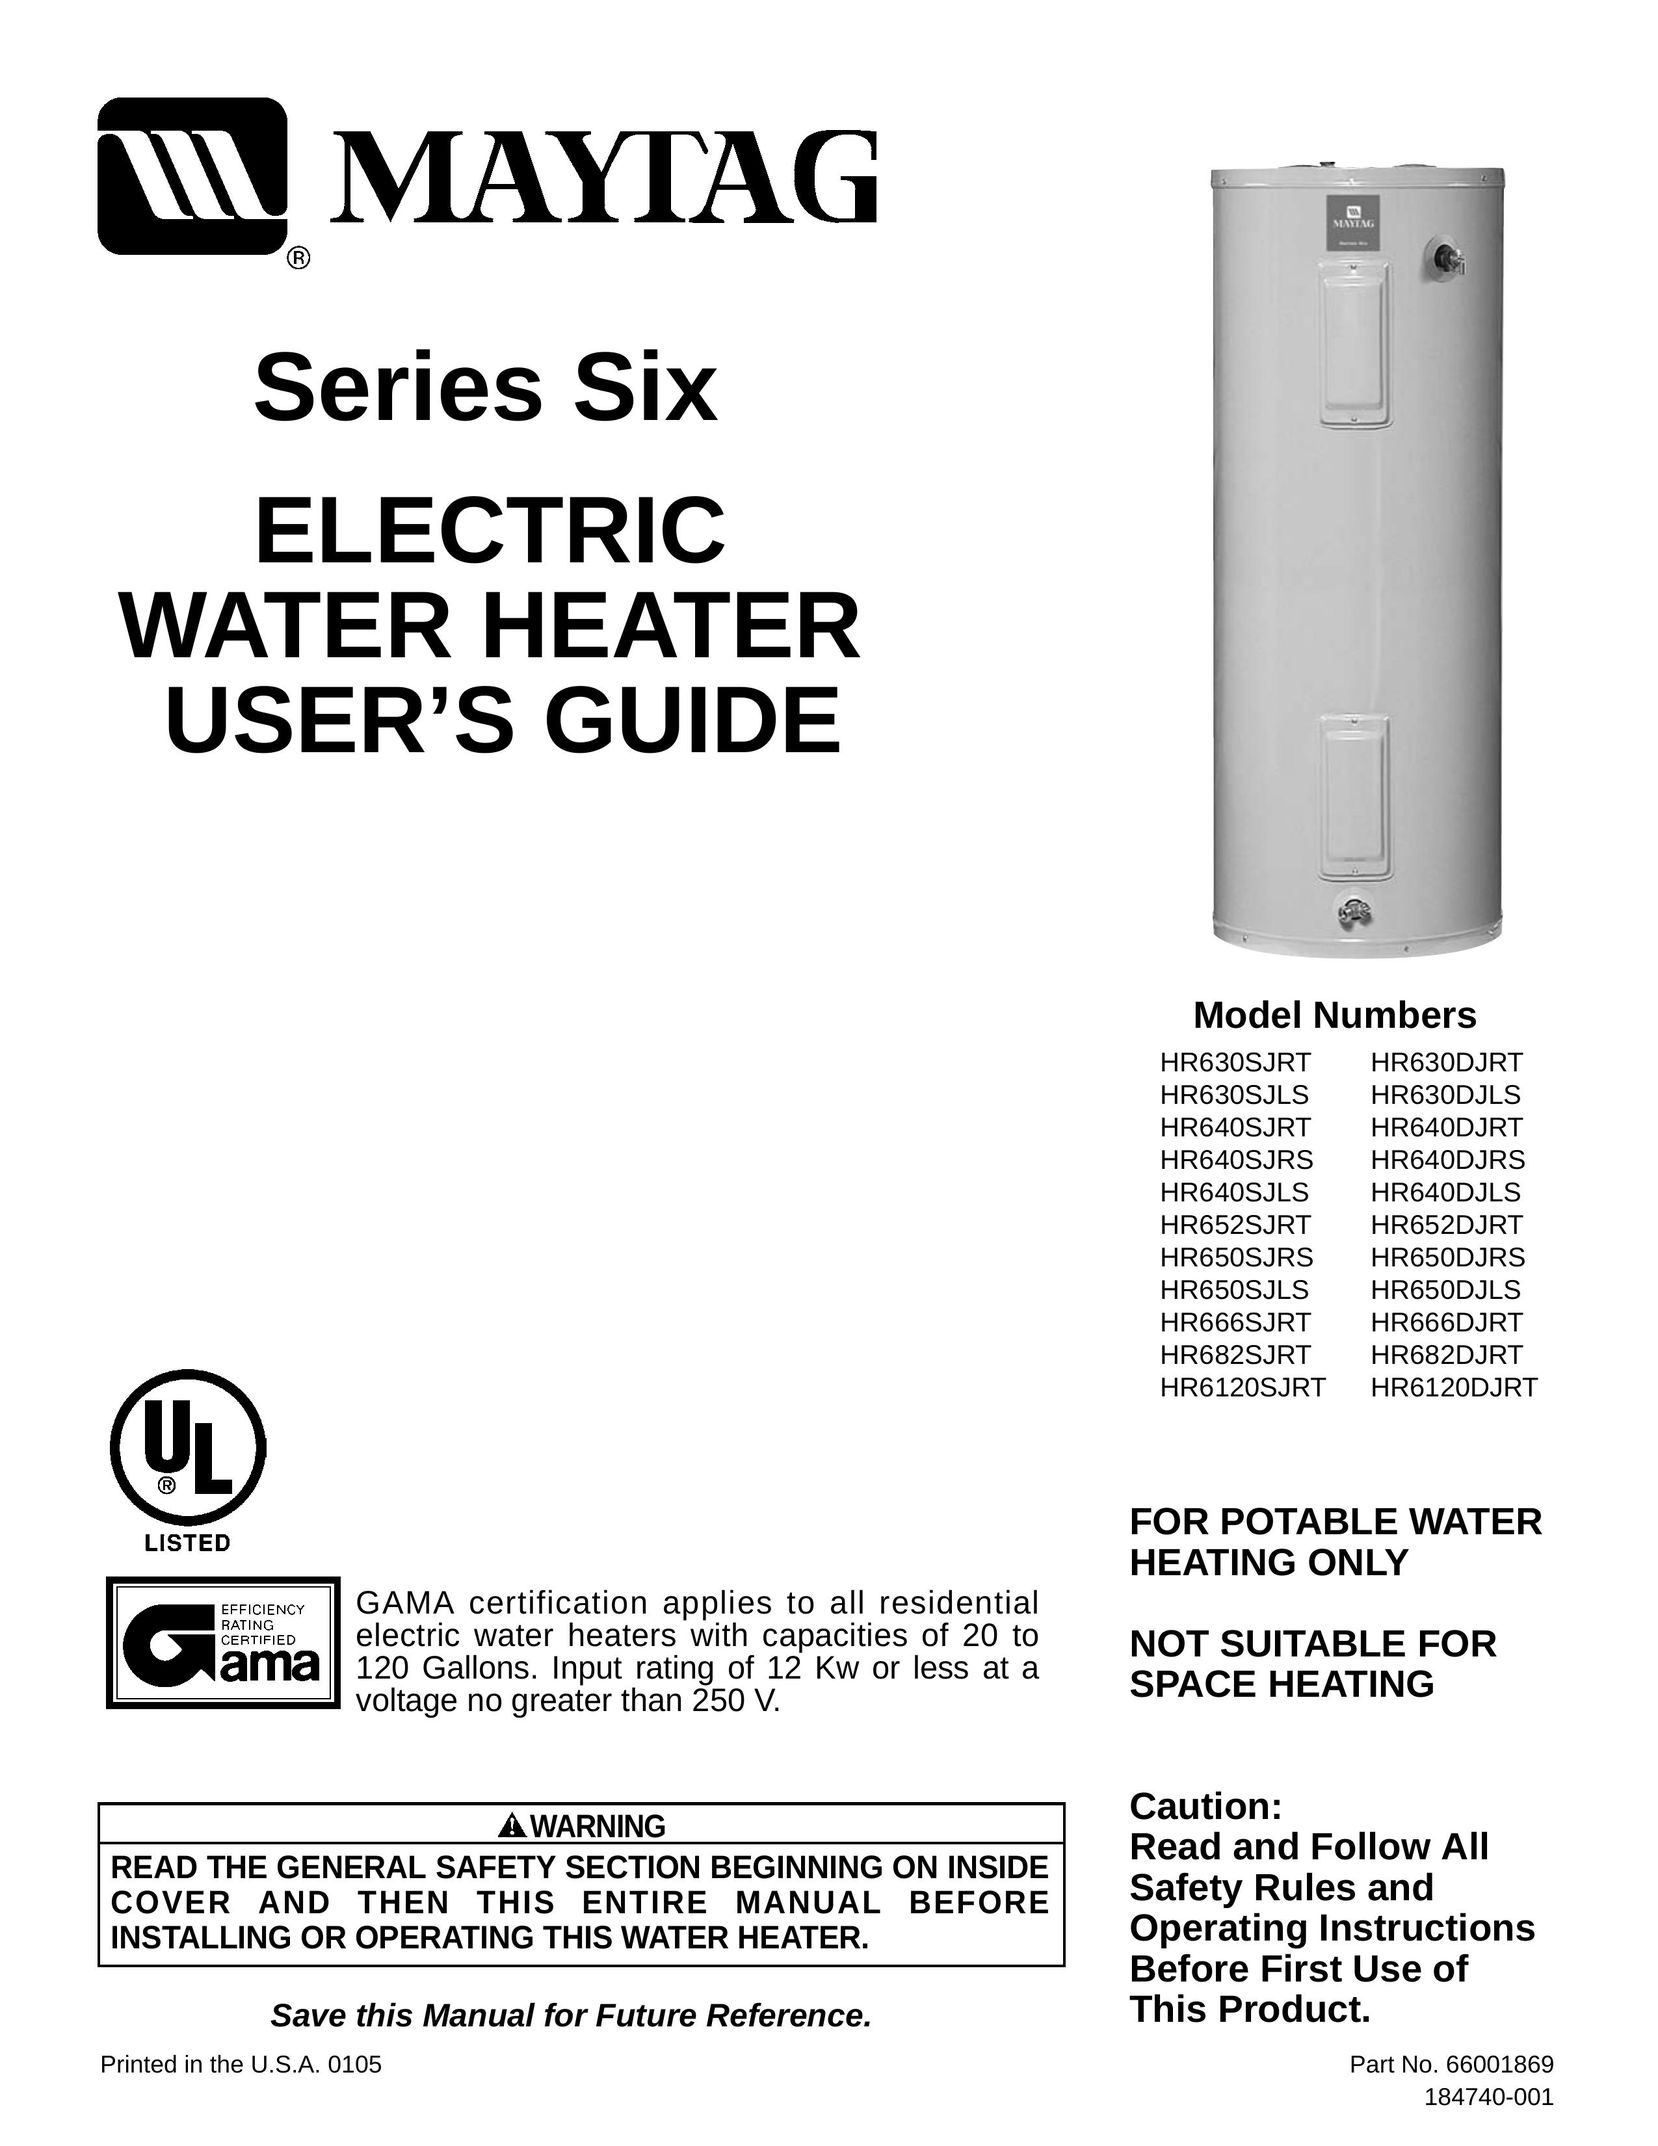 Maytag HR666DJRT Water Heater User Manual